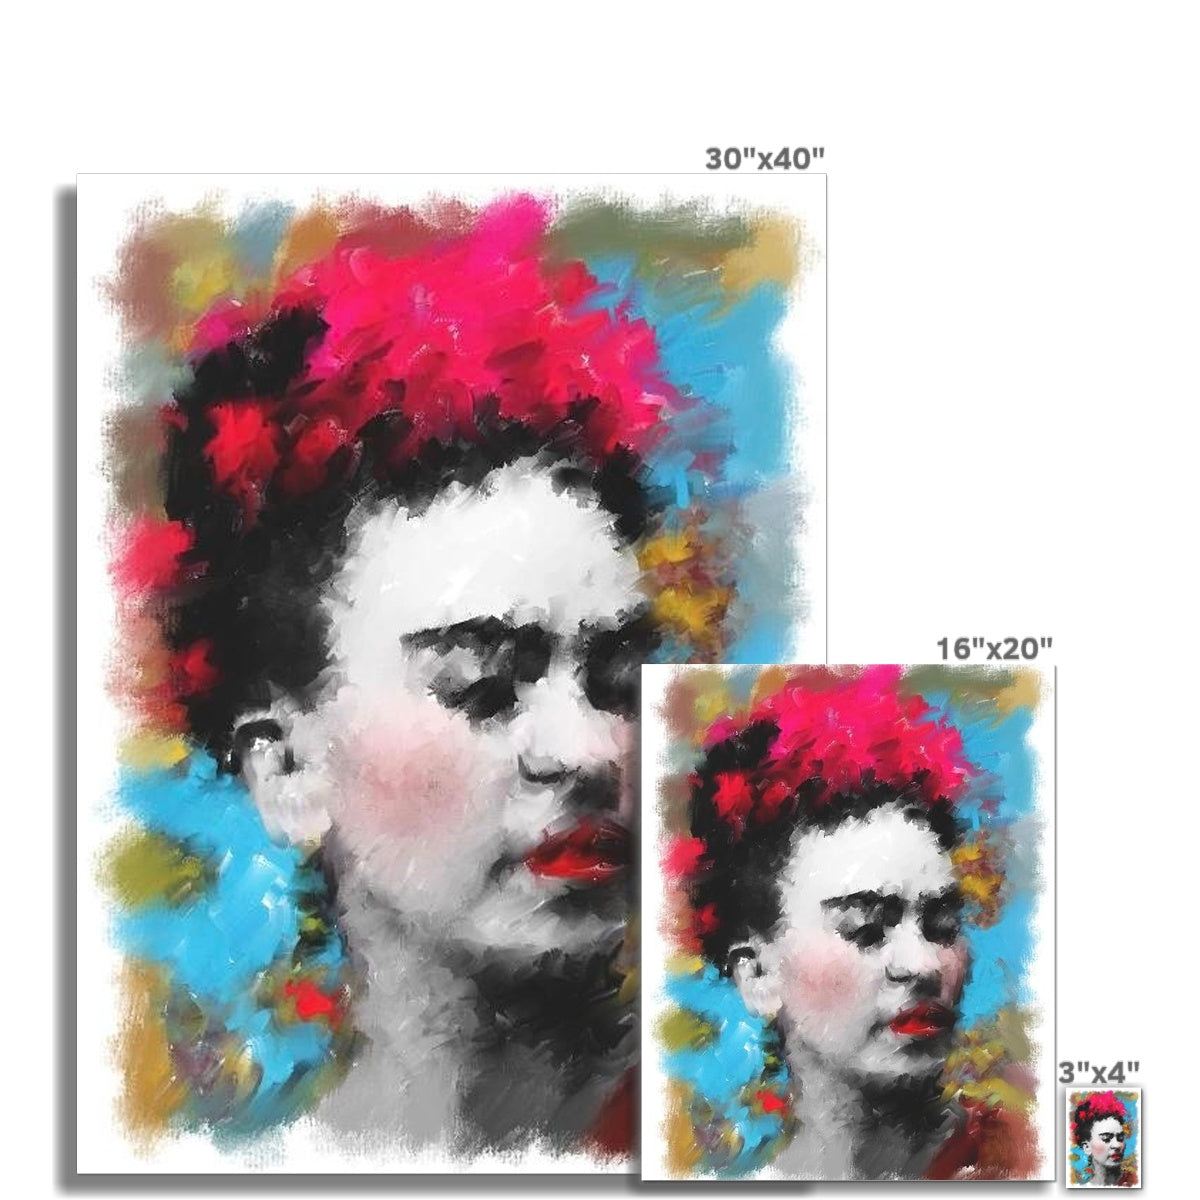 Frida Kahlo - Portrait C-Type Print